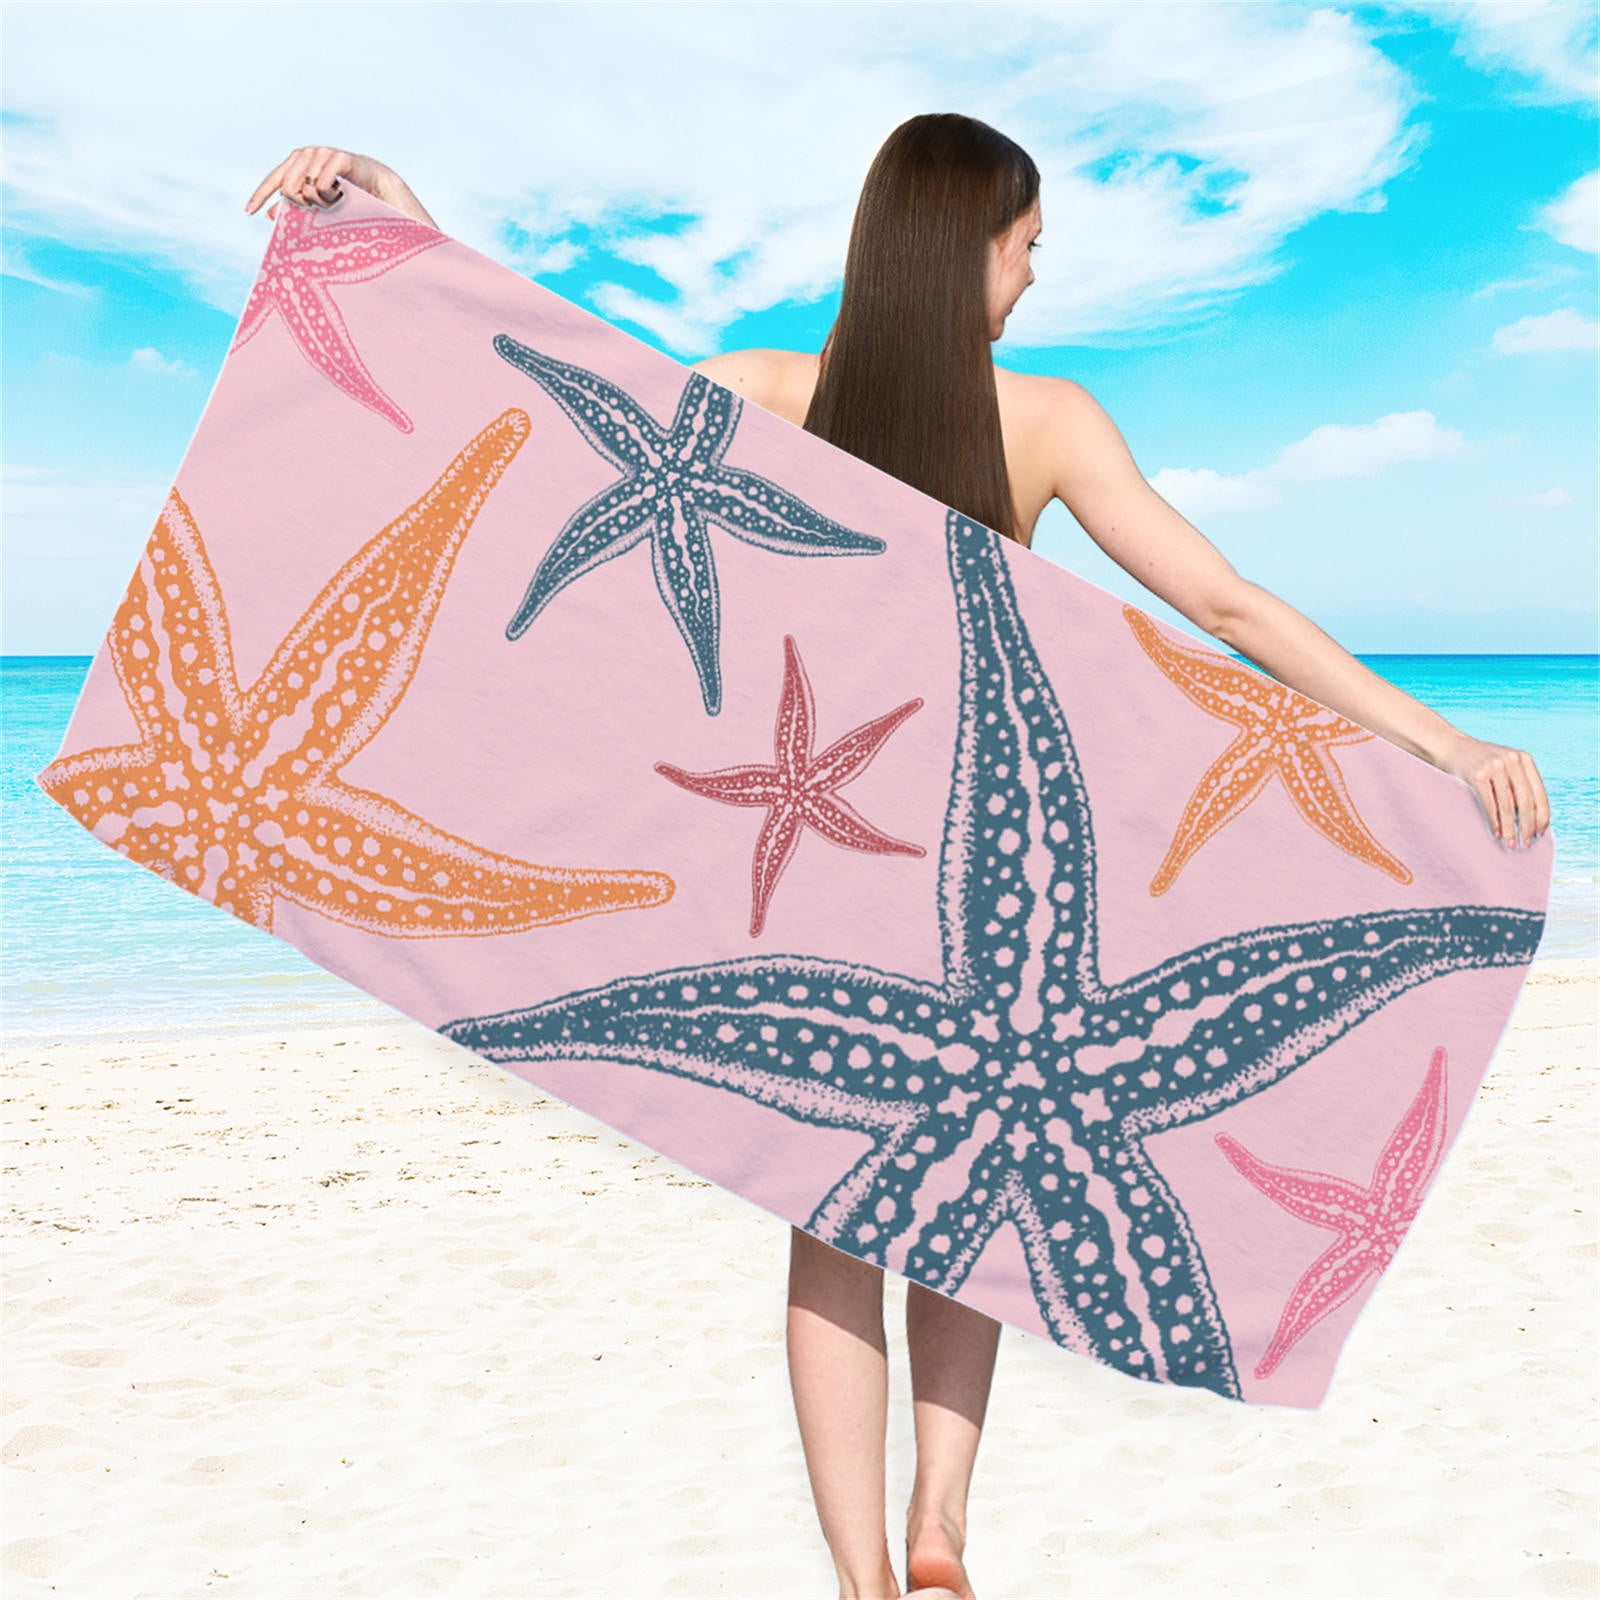 Realhomelove Microfiber Pool Sandproof Beach Towel Blanket - Quick